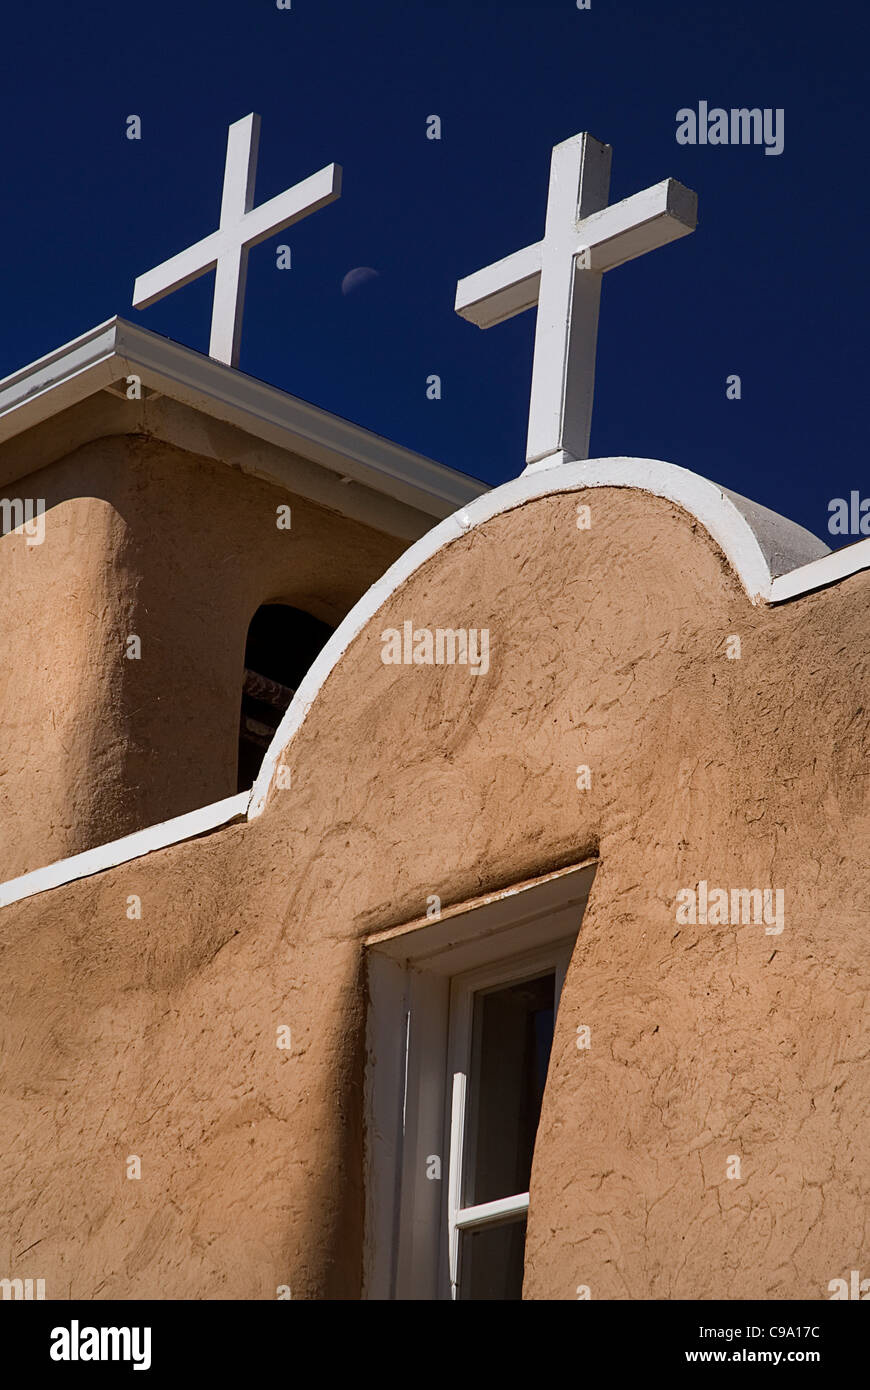 USA, New Mexiko, Taos, Mission Church of San Francisco de Asis mit Kreuzen auf dem Dach. Stockfoto